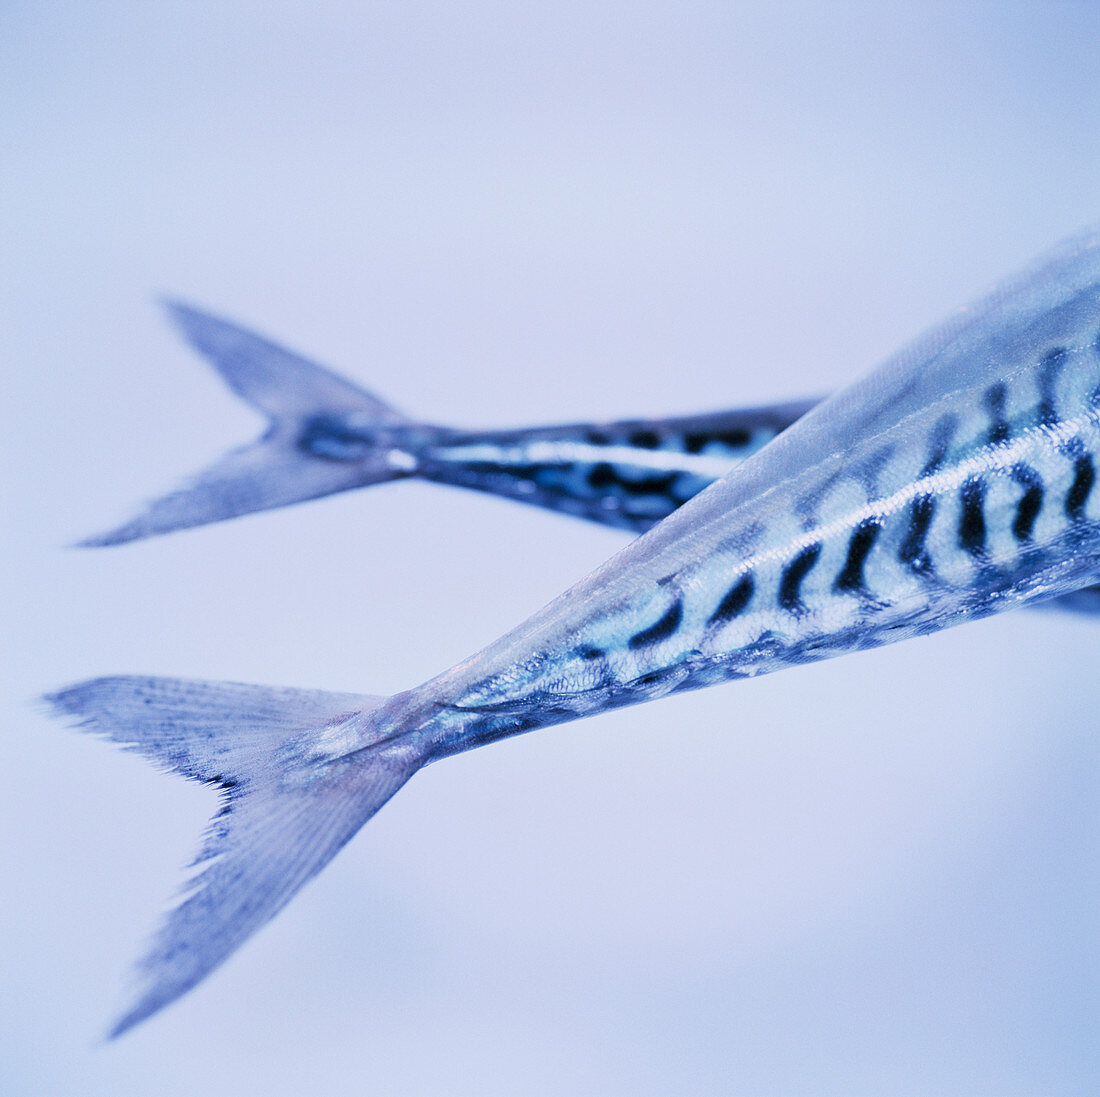 Mackerel fish tails